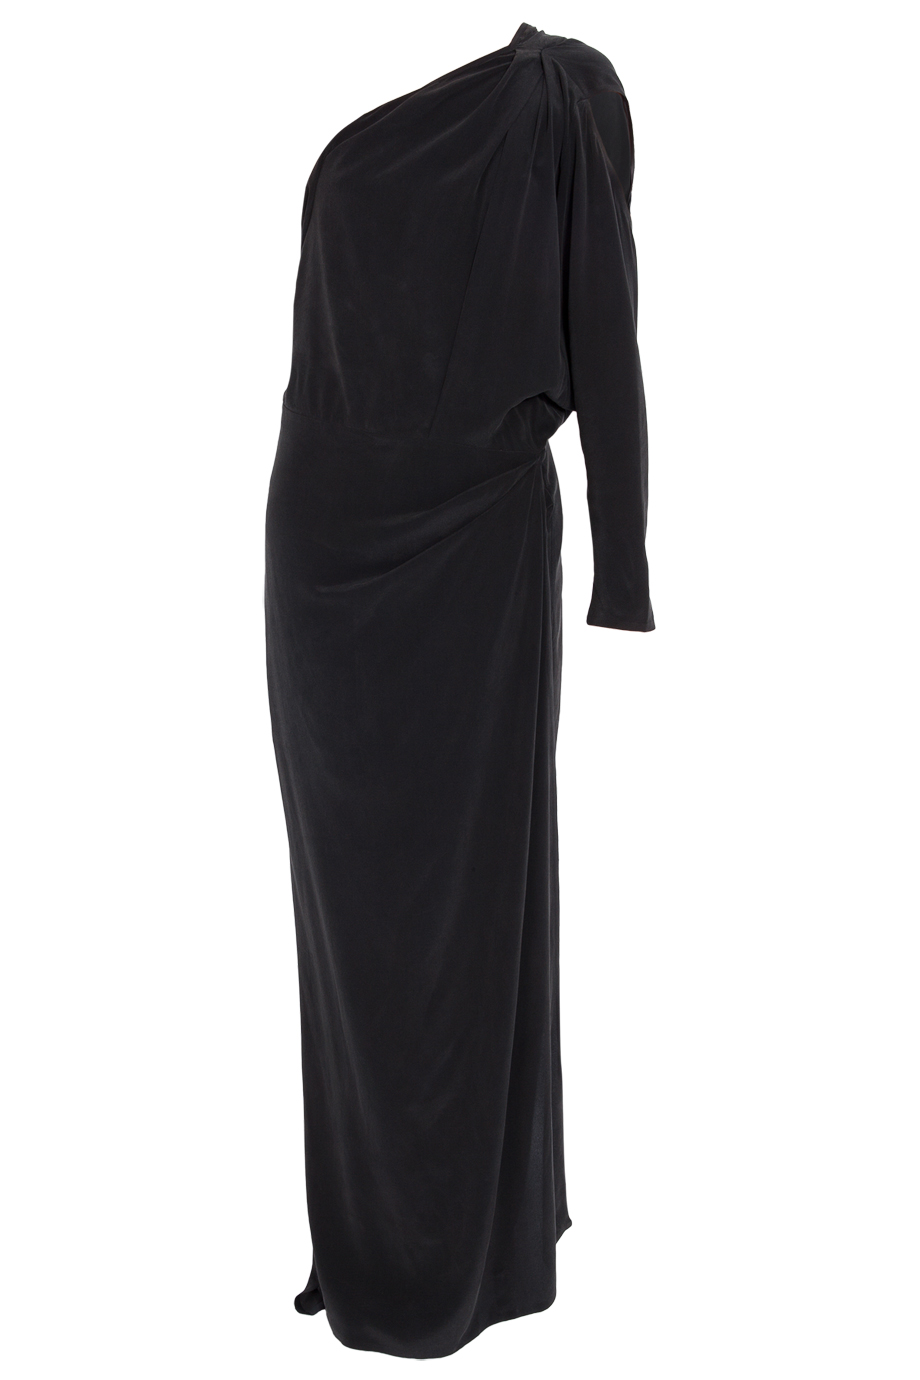 Acne studios One Shoulder Silk Maxi Dress in Black | Lyst